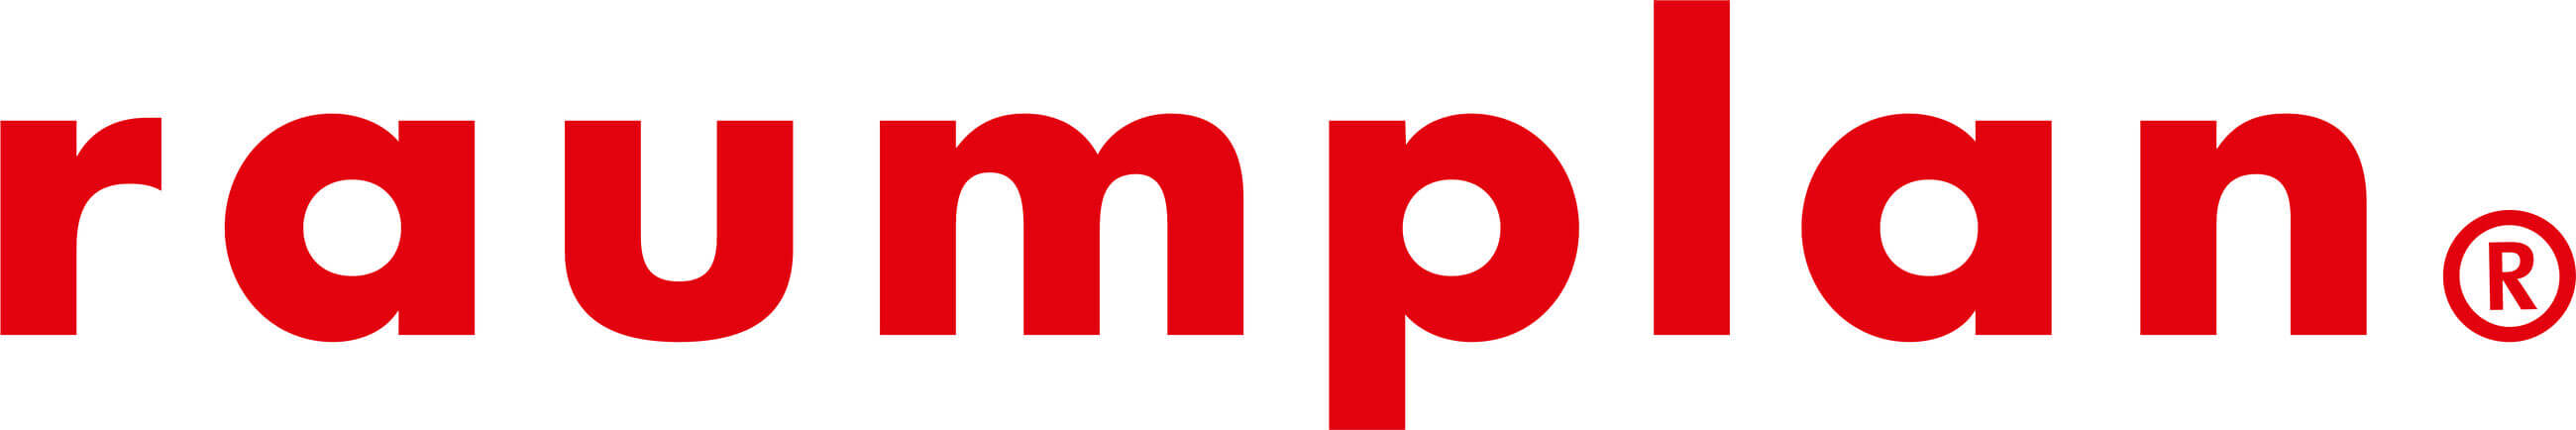 Raumplan Logo 100 100 4c